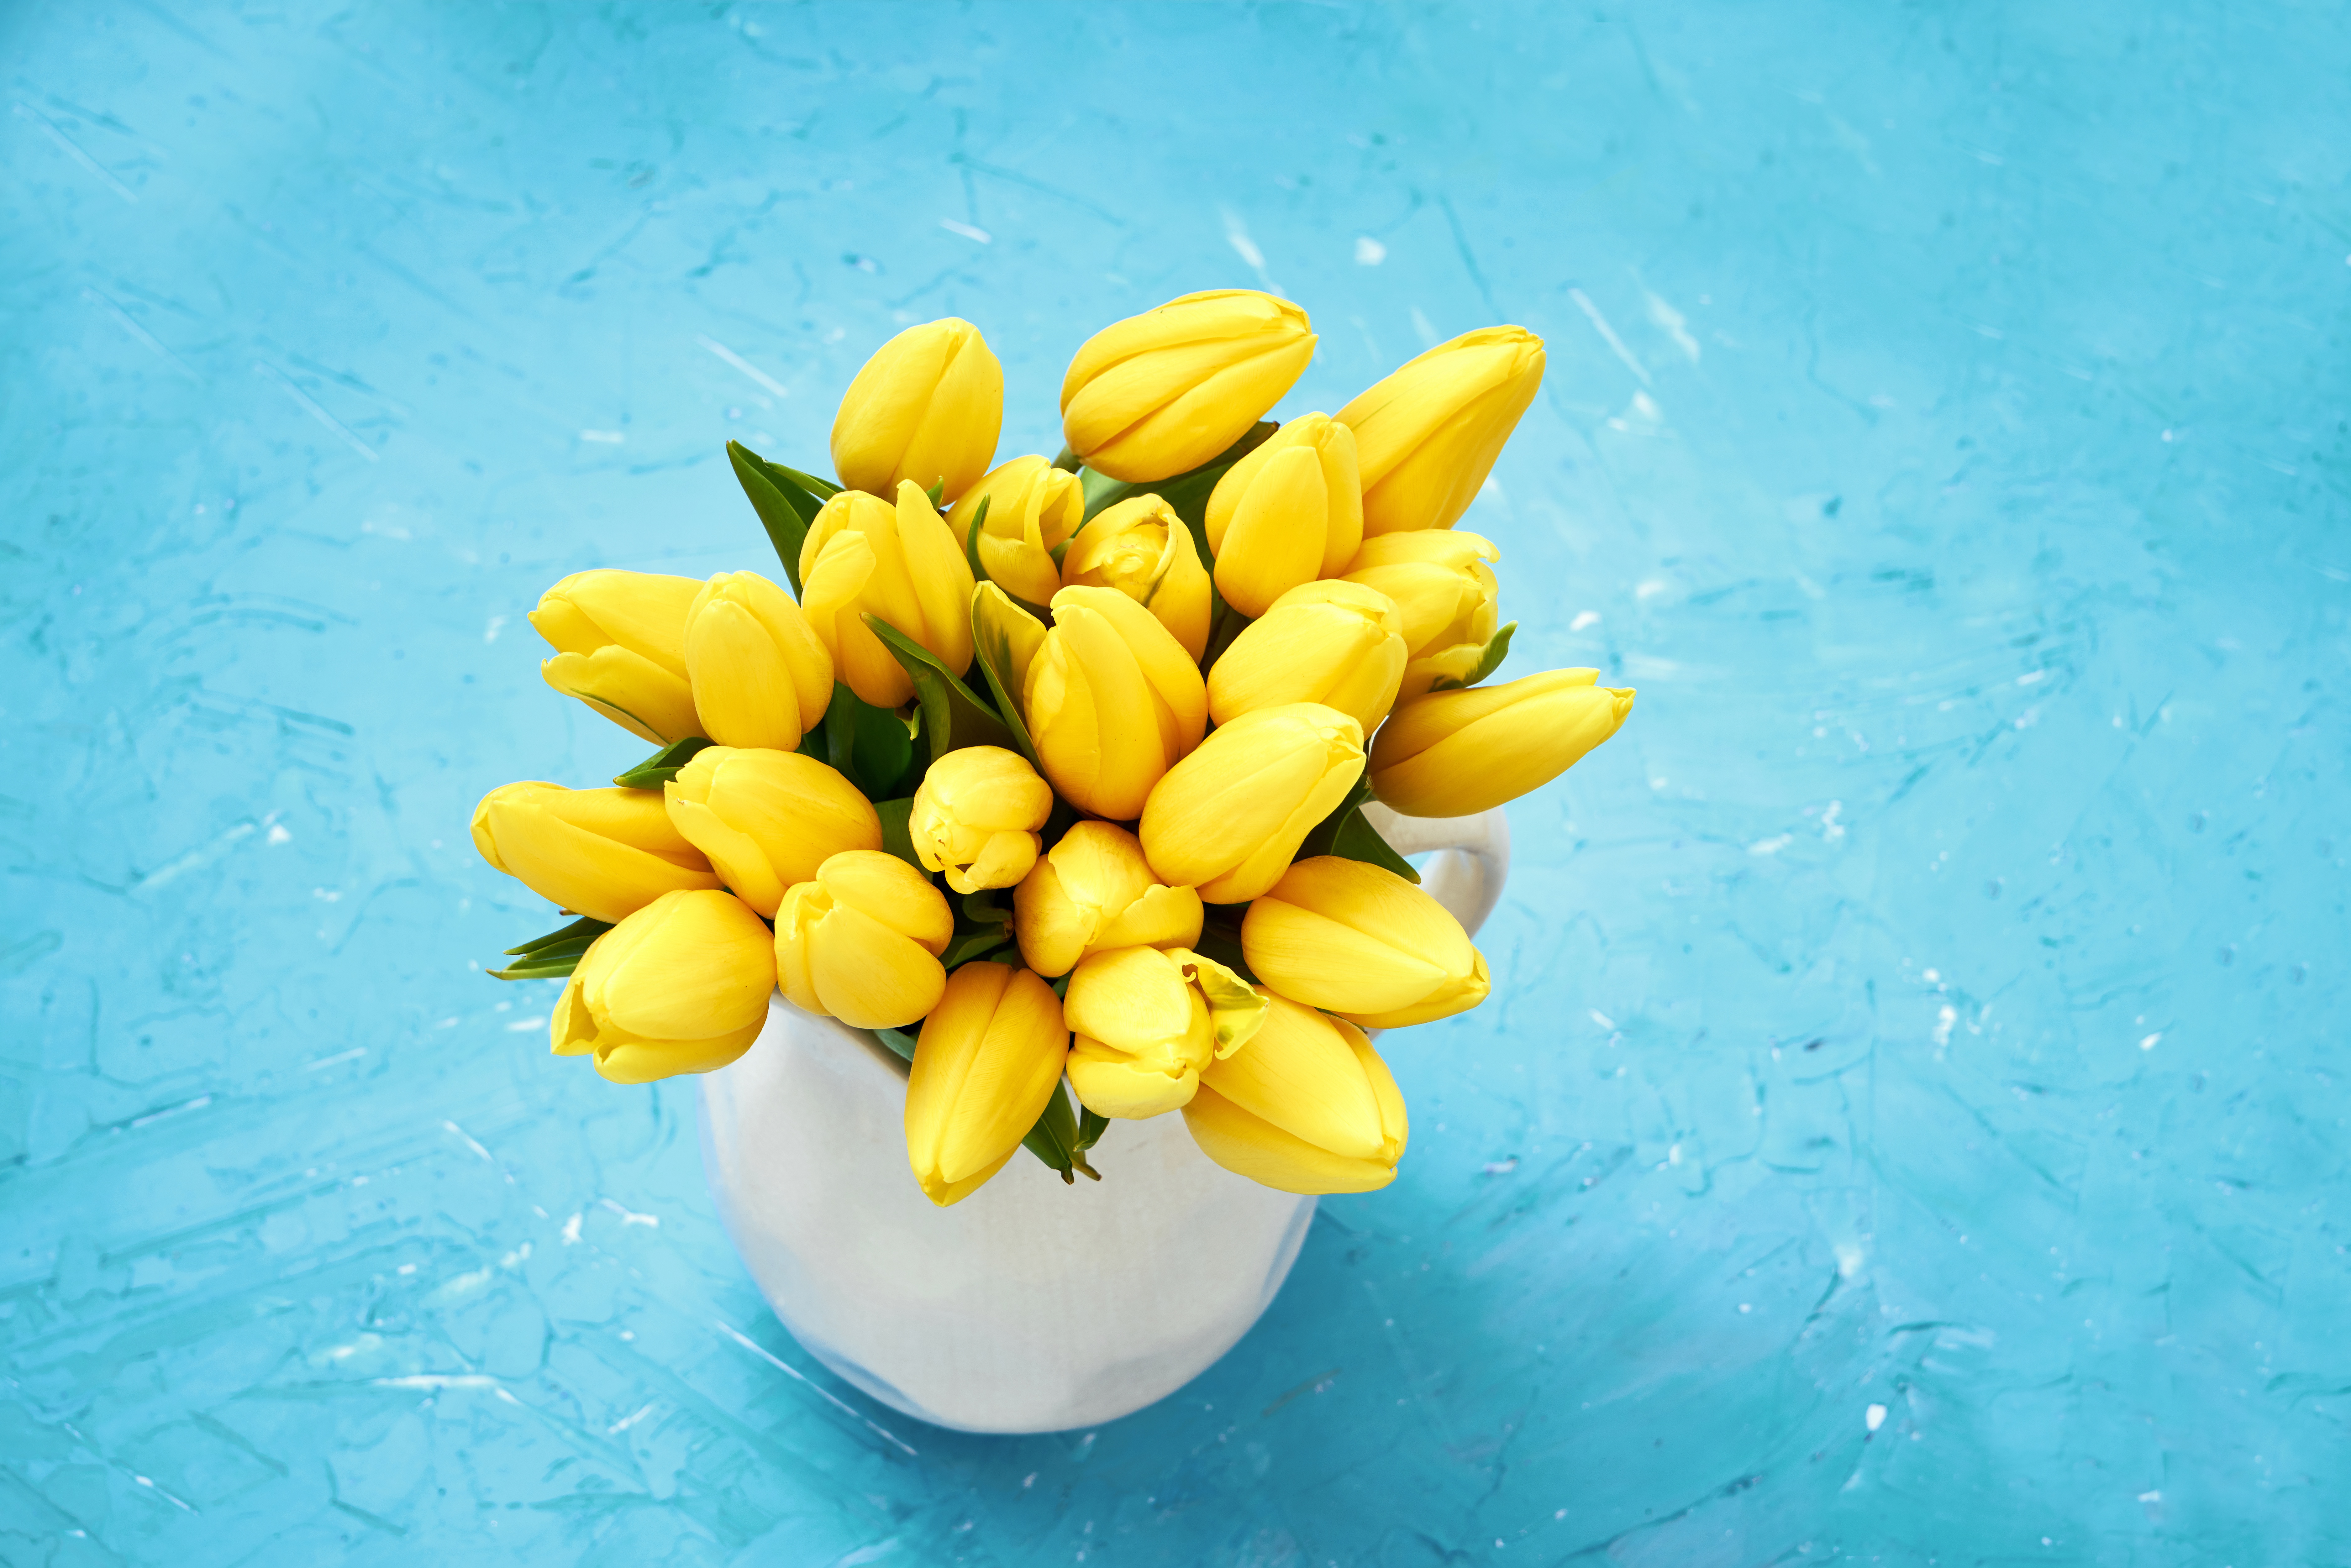 8К обои, желтые тюльпаны, голубой фон, букет, ваза, бутоны, весенние цветы, 8K wallpaper, yellow tulips, blue background, bouquet, vase, buds, spring flowers